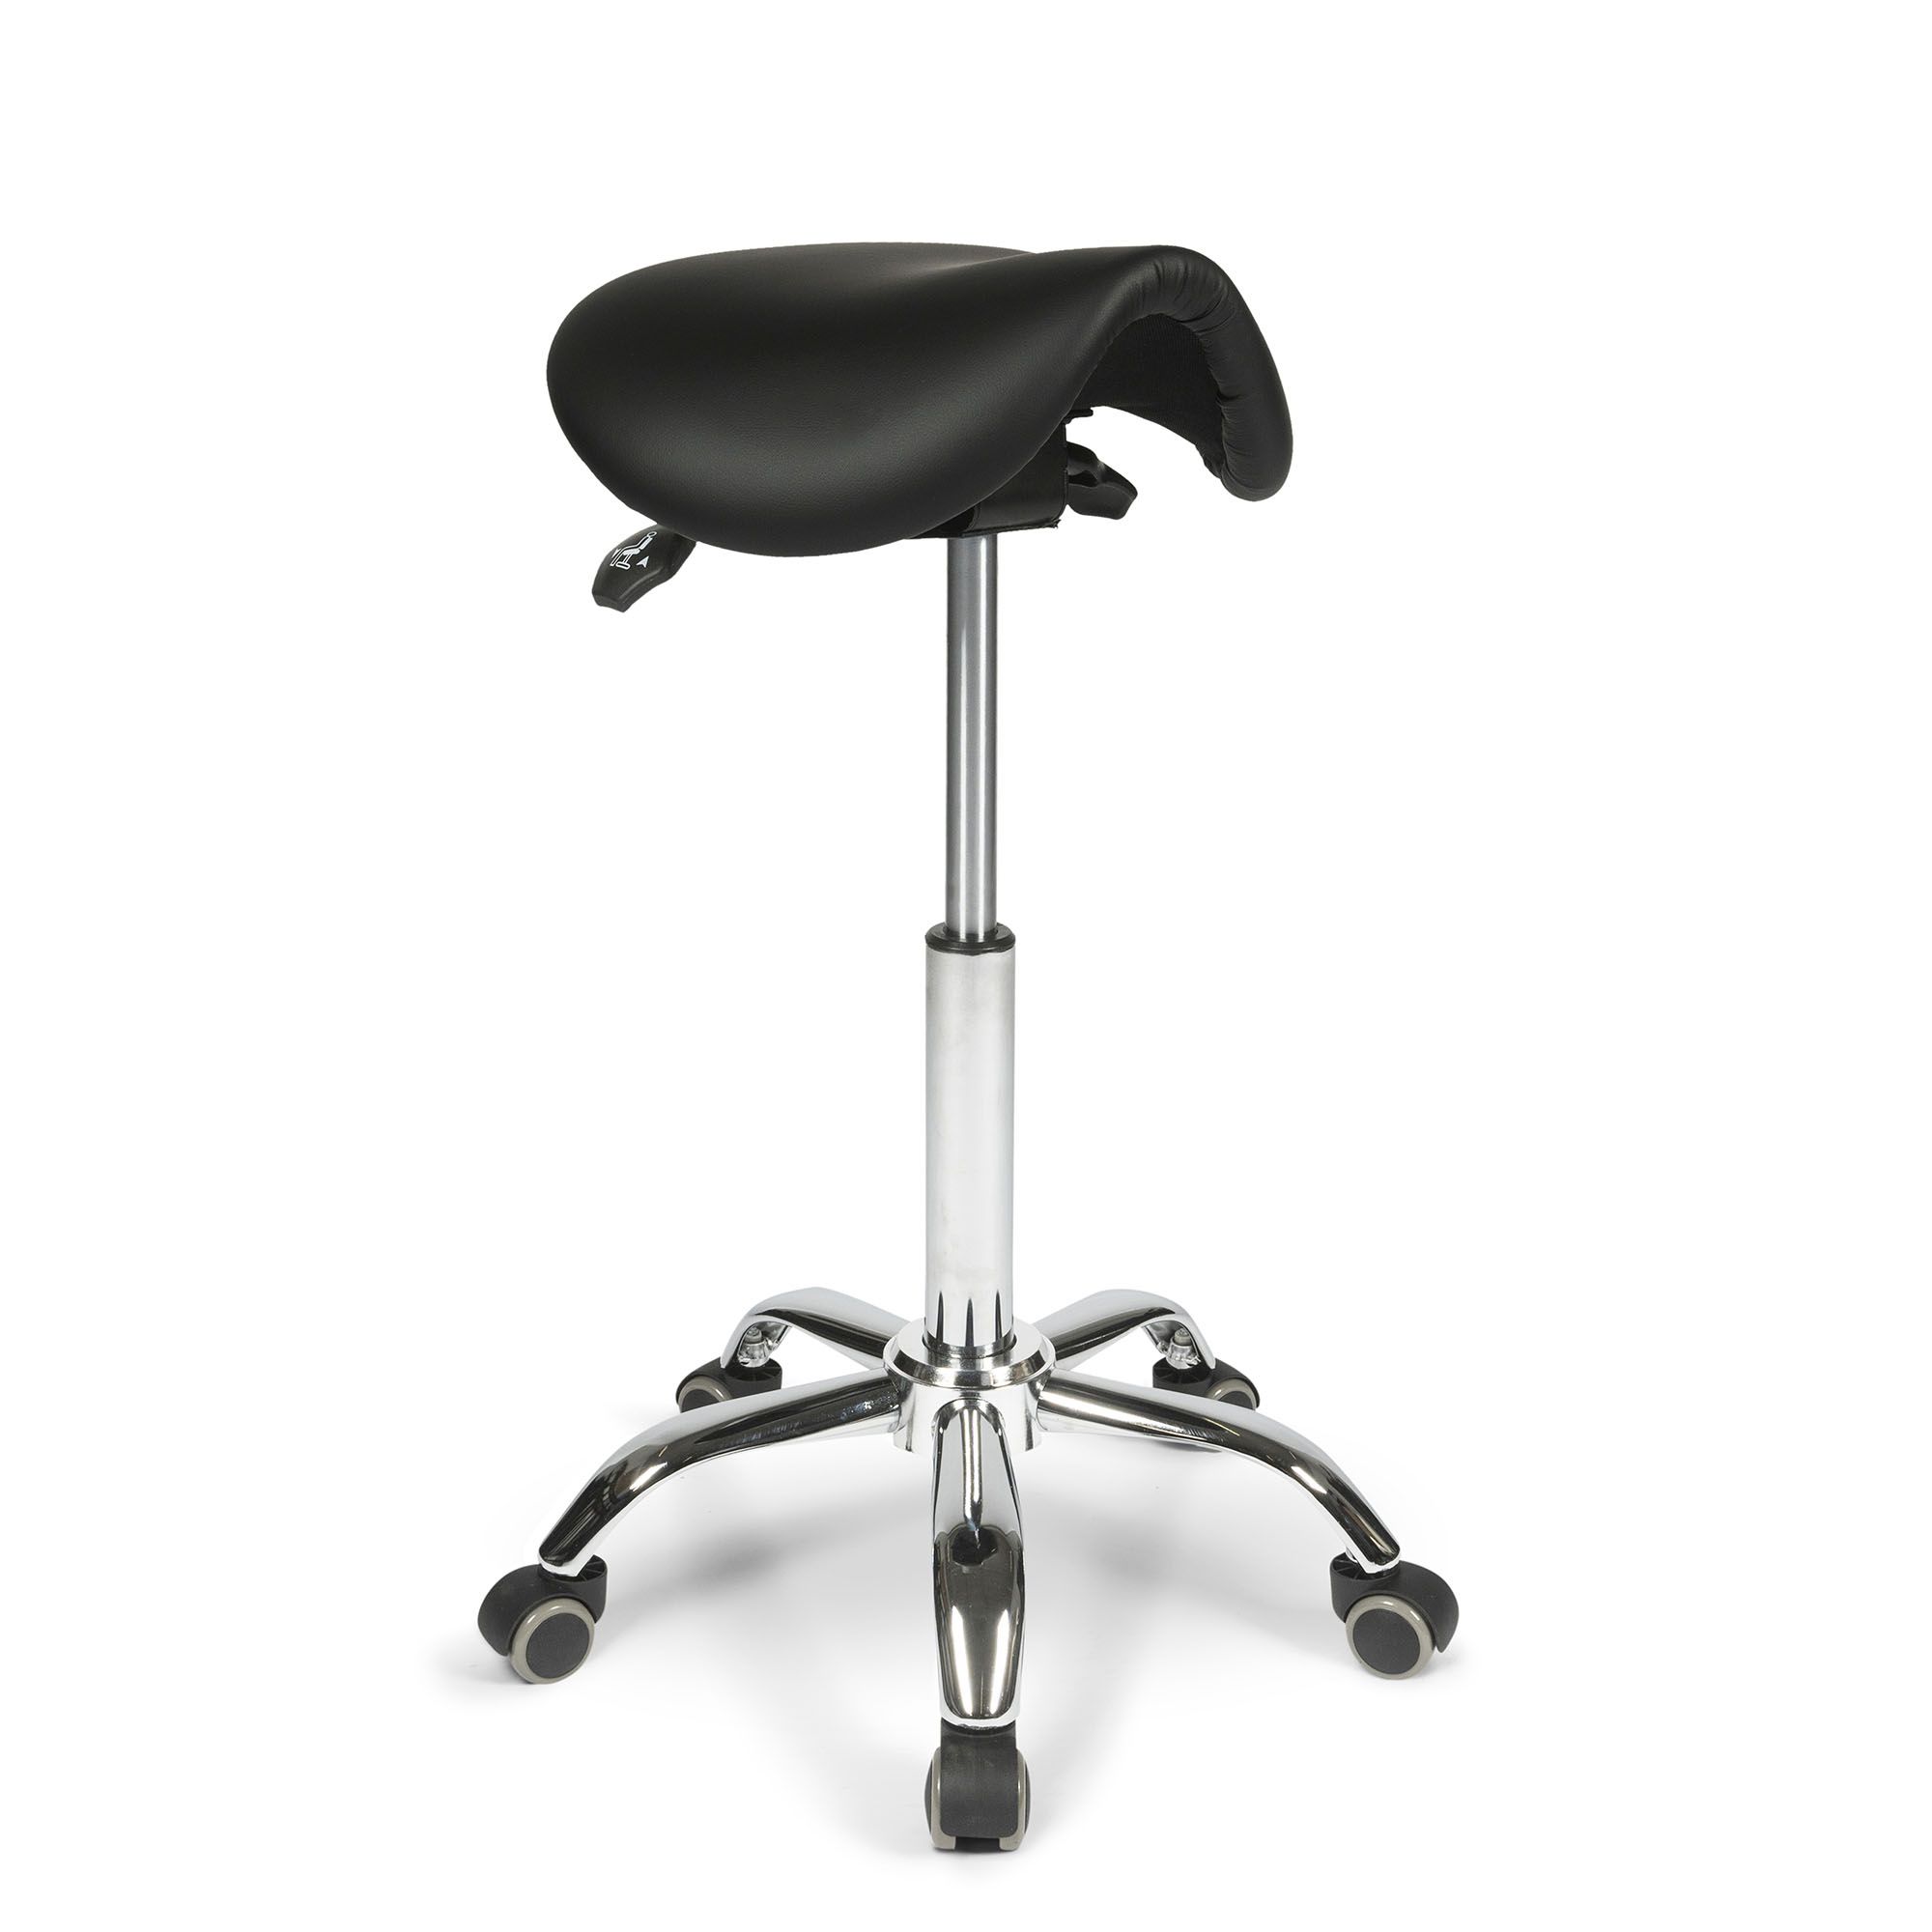 dunimed ergonomic saddle stool with tiltable seat adjustment handle